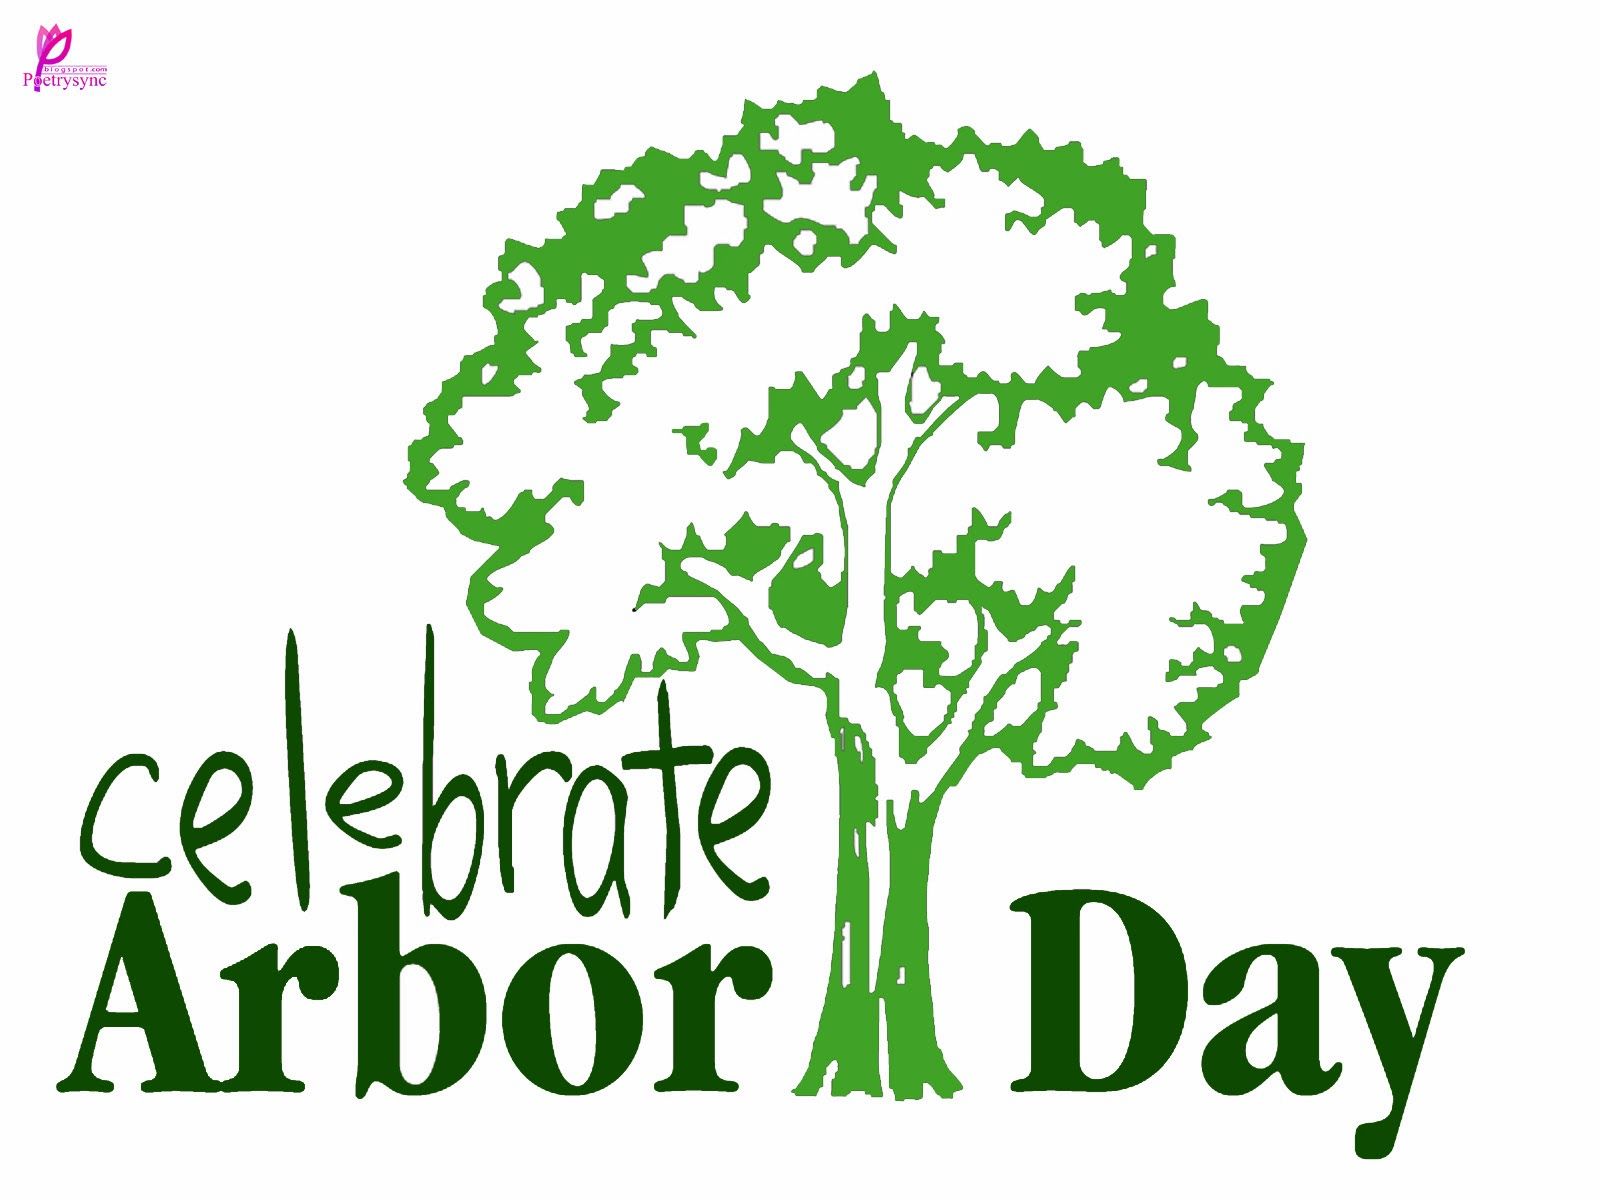 Arbor Day in Ely, NV